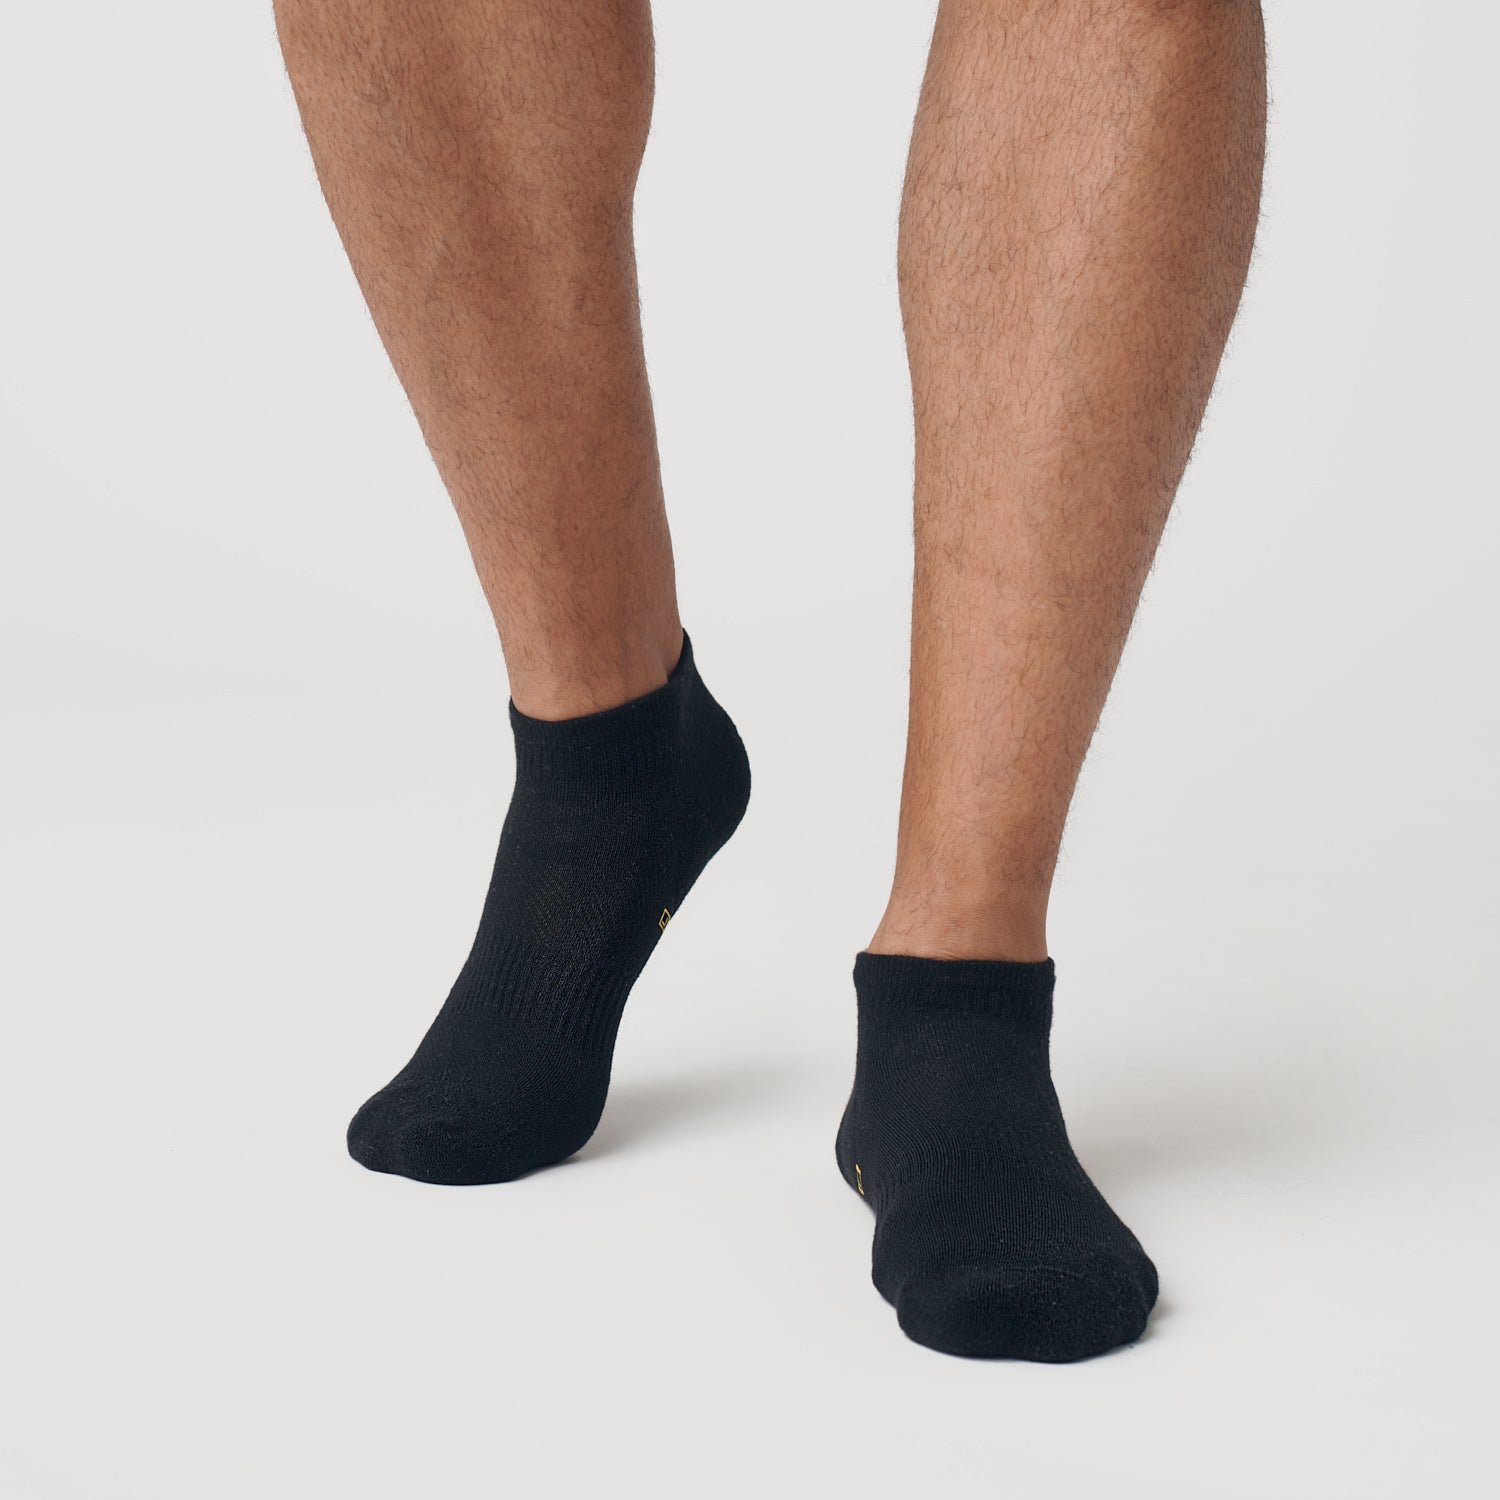 Black Ankle Socks 3-Pack